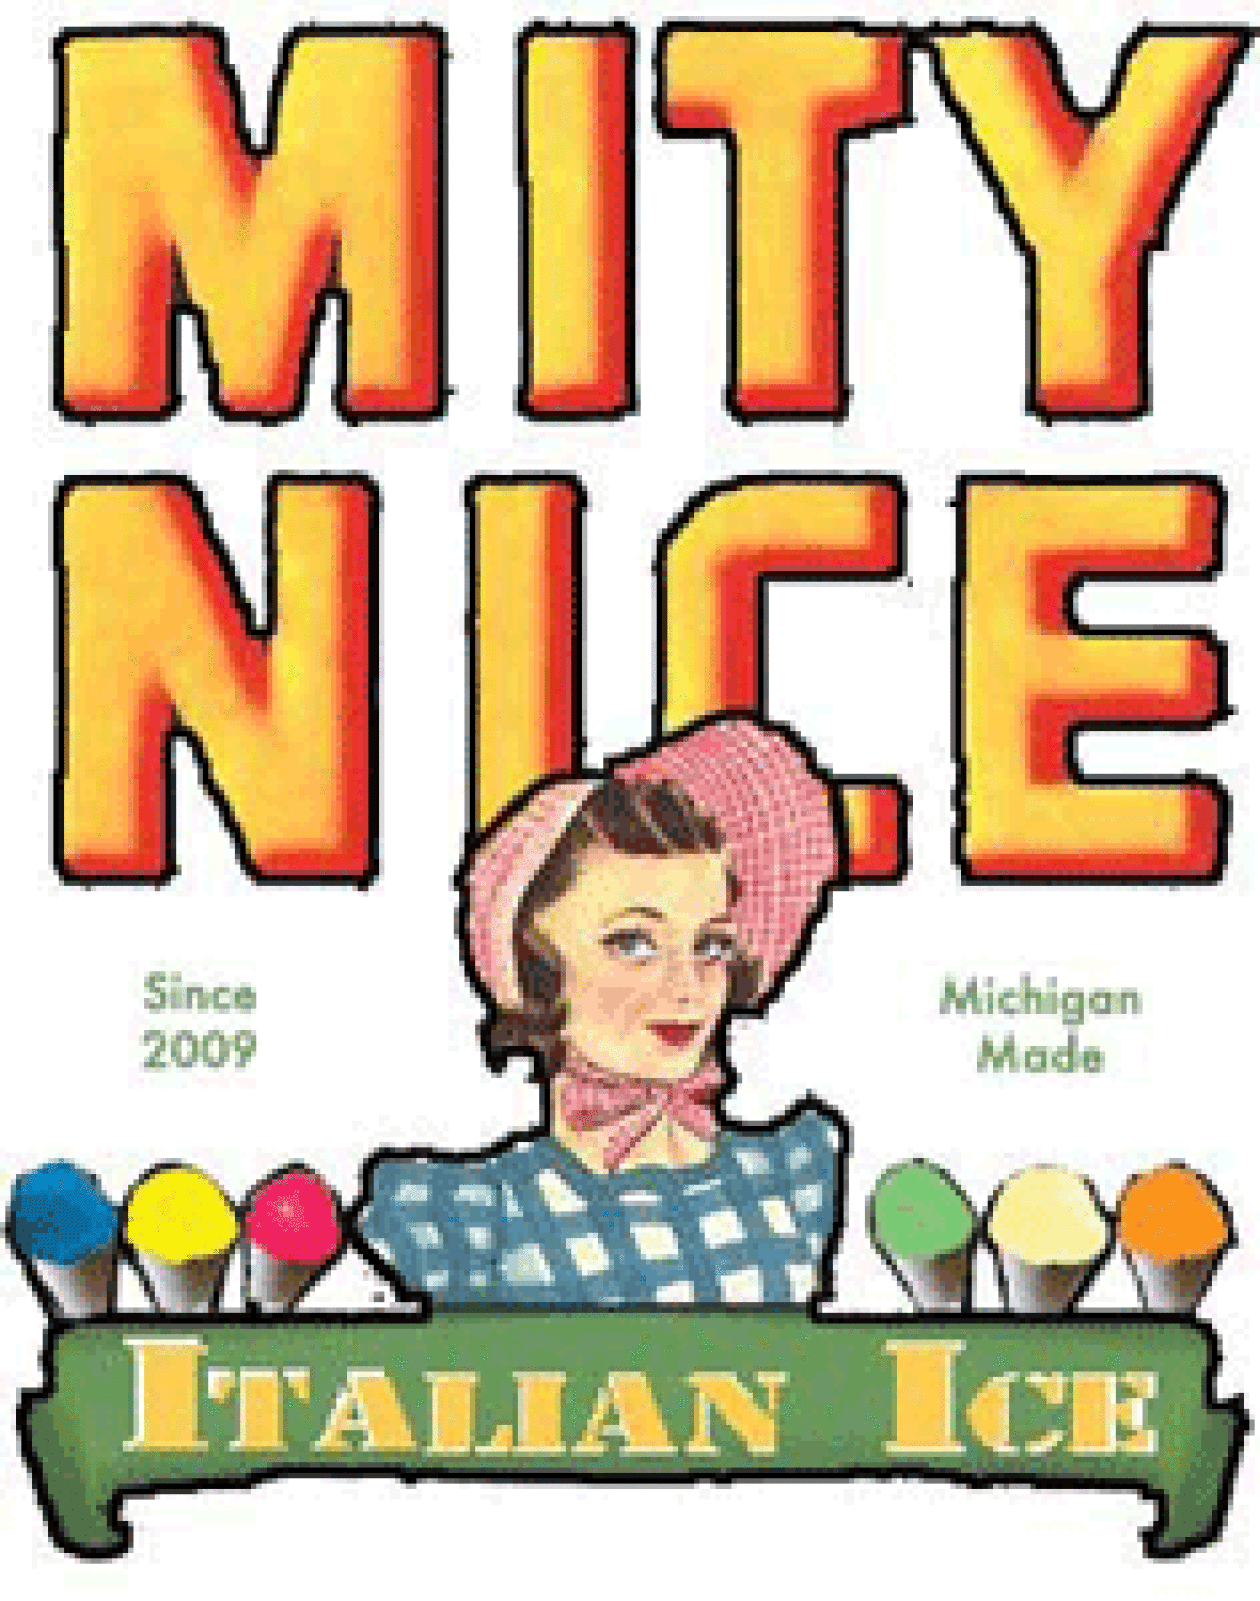 Mity Nice Italian Ice!